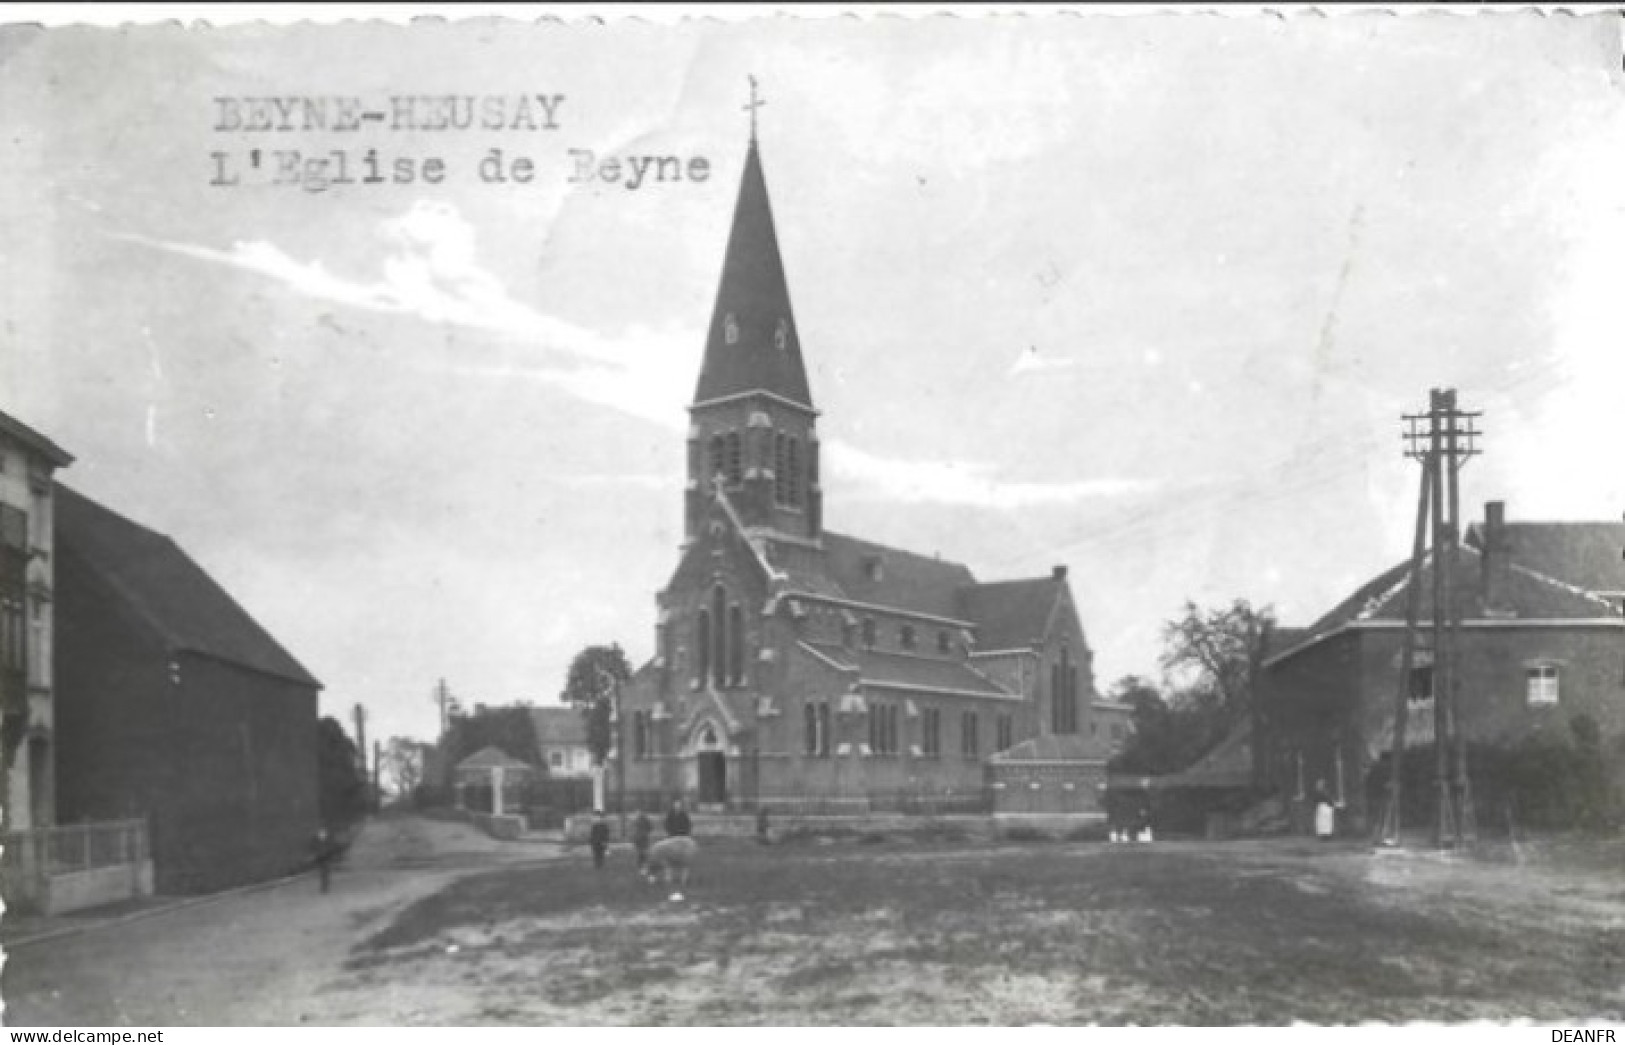 BEYNE-Heusay : L'Eglise De Beyne - Carte-photo - Lire Le Texte Au Verso De La Carte. - Beyne-Heusay